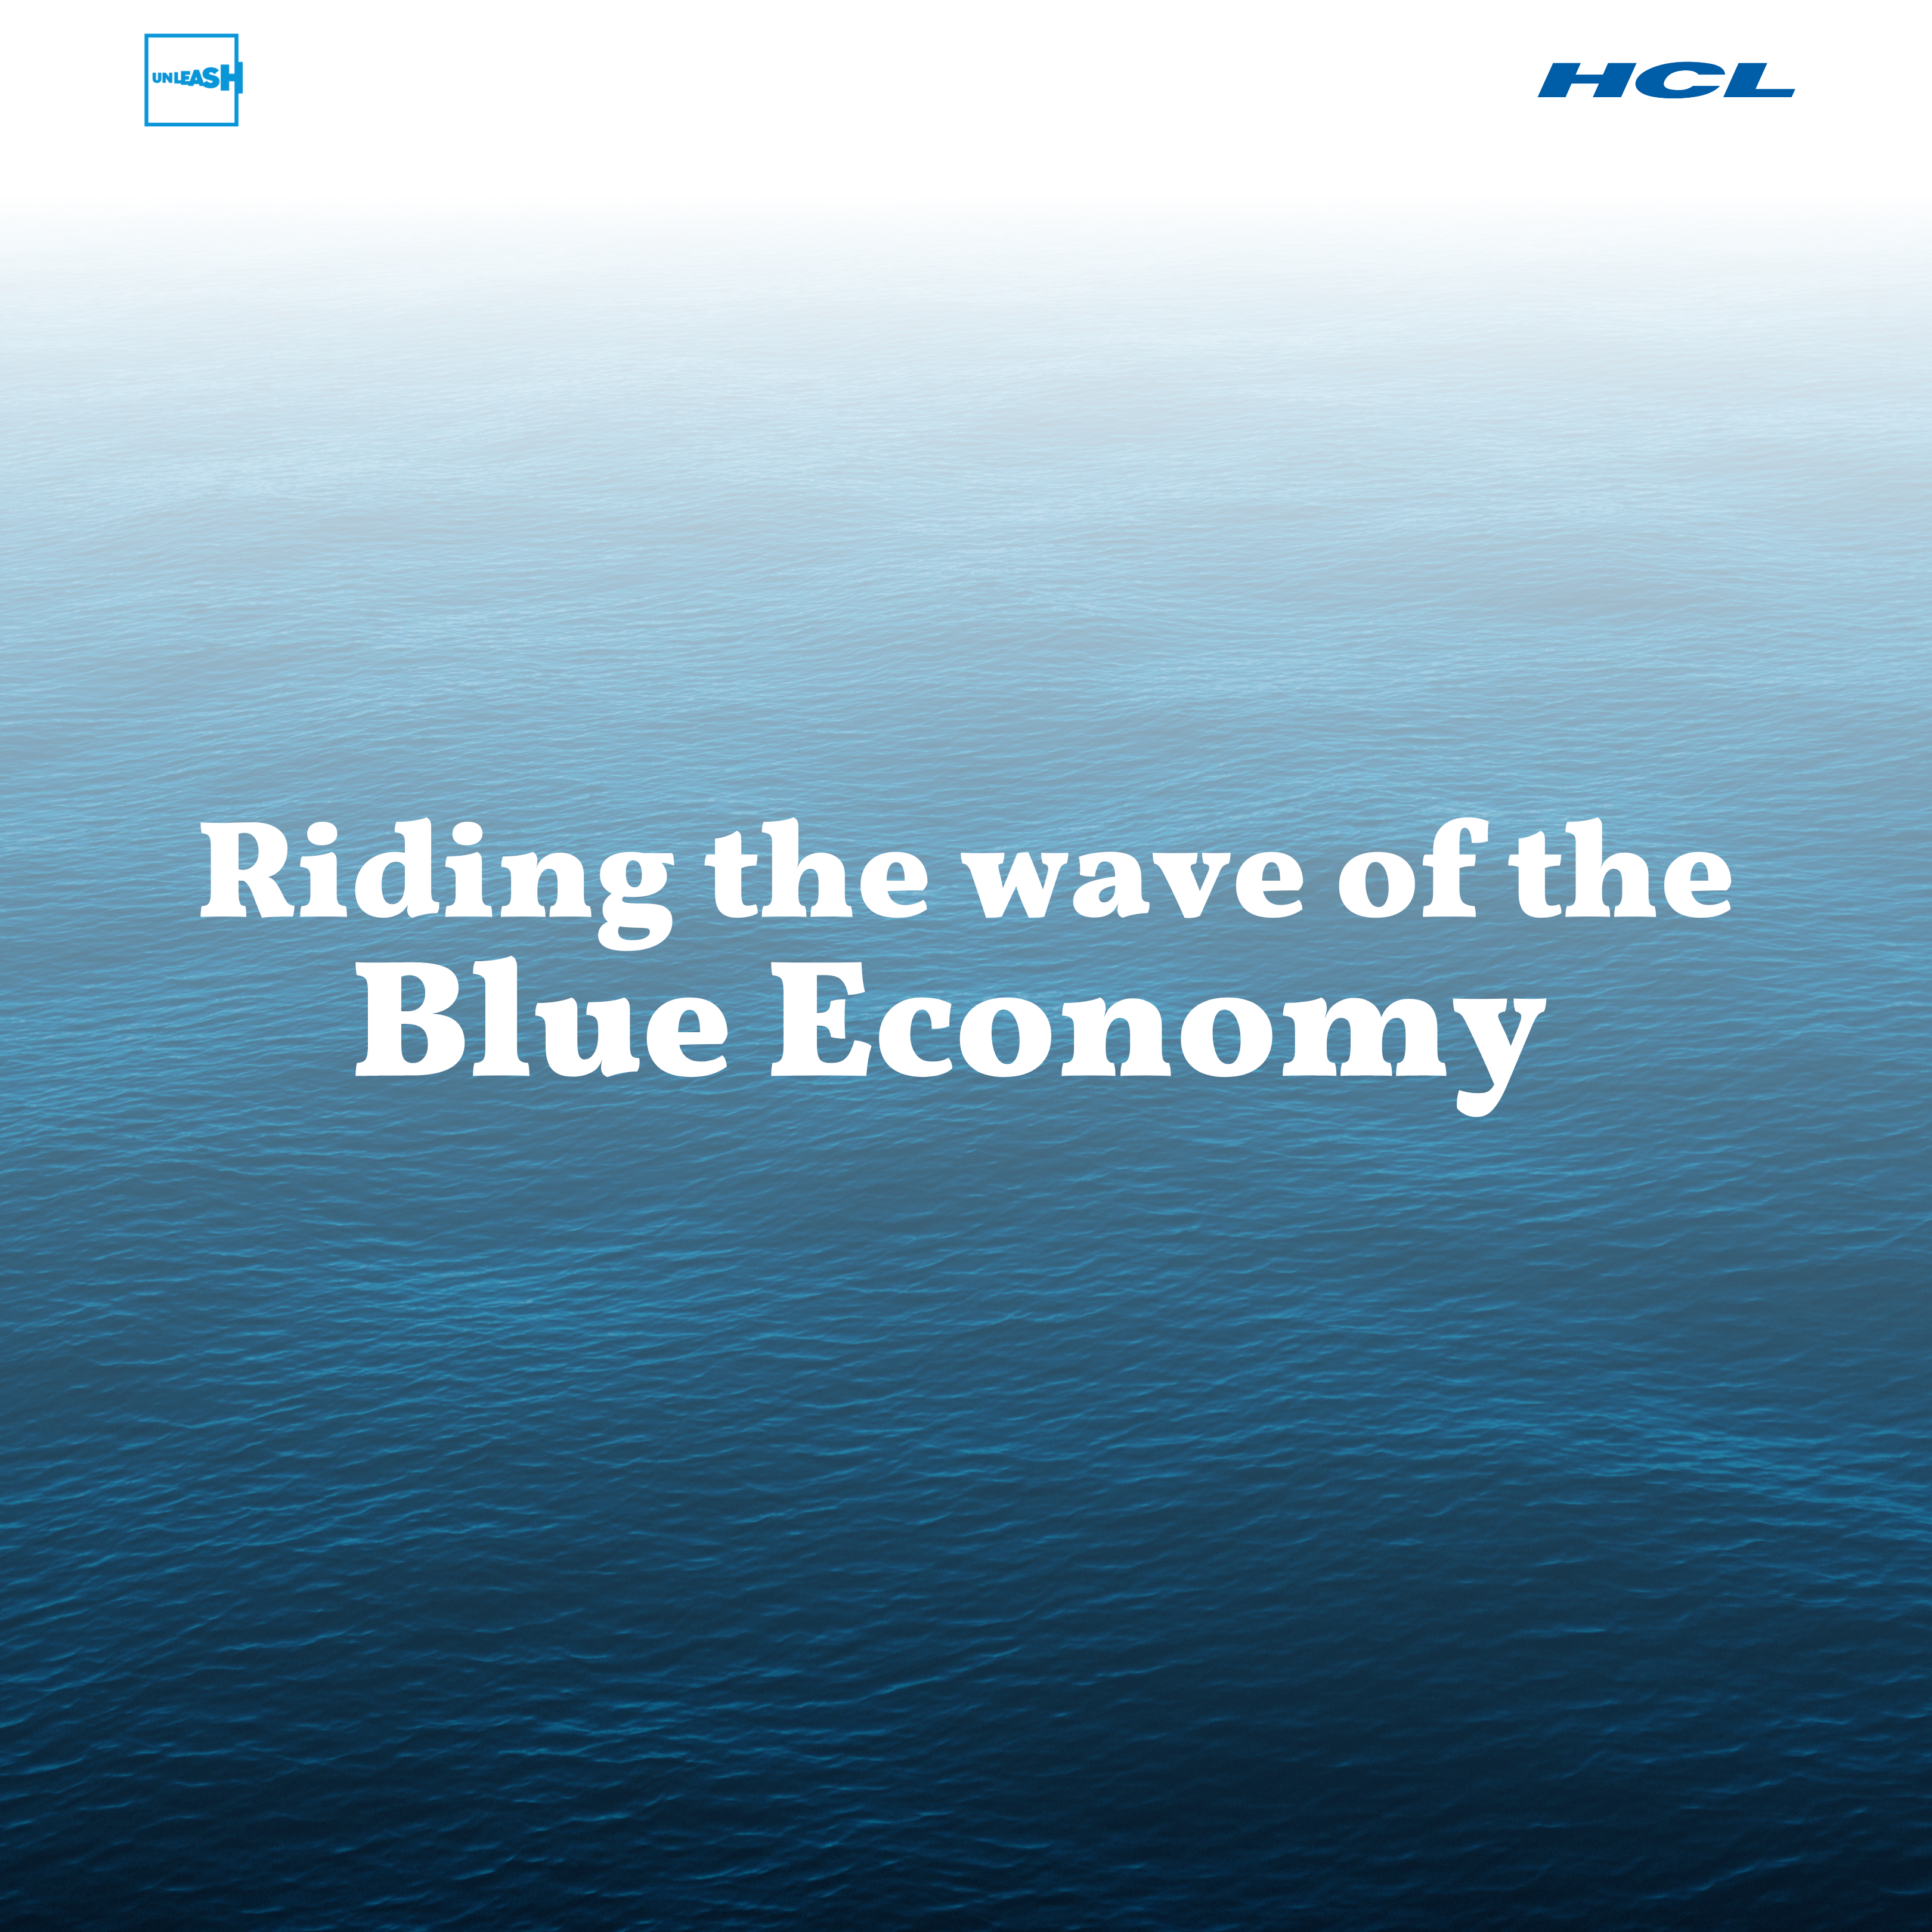 Riding the Blue Economy Wave